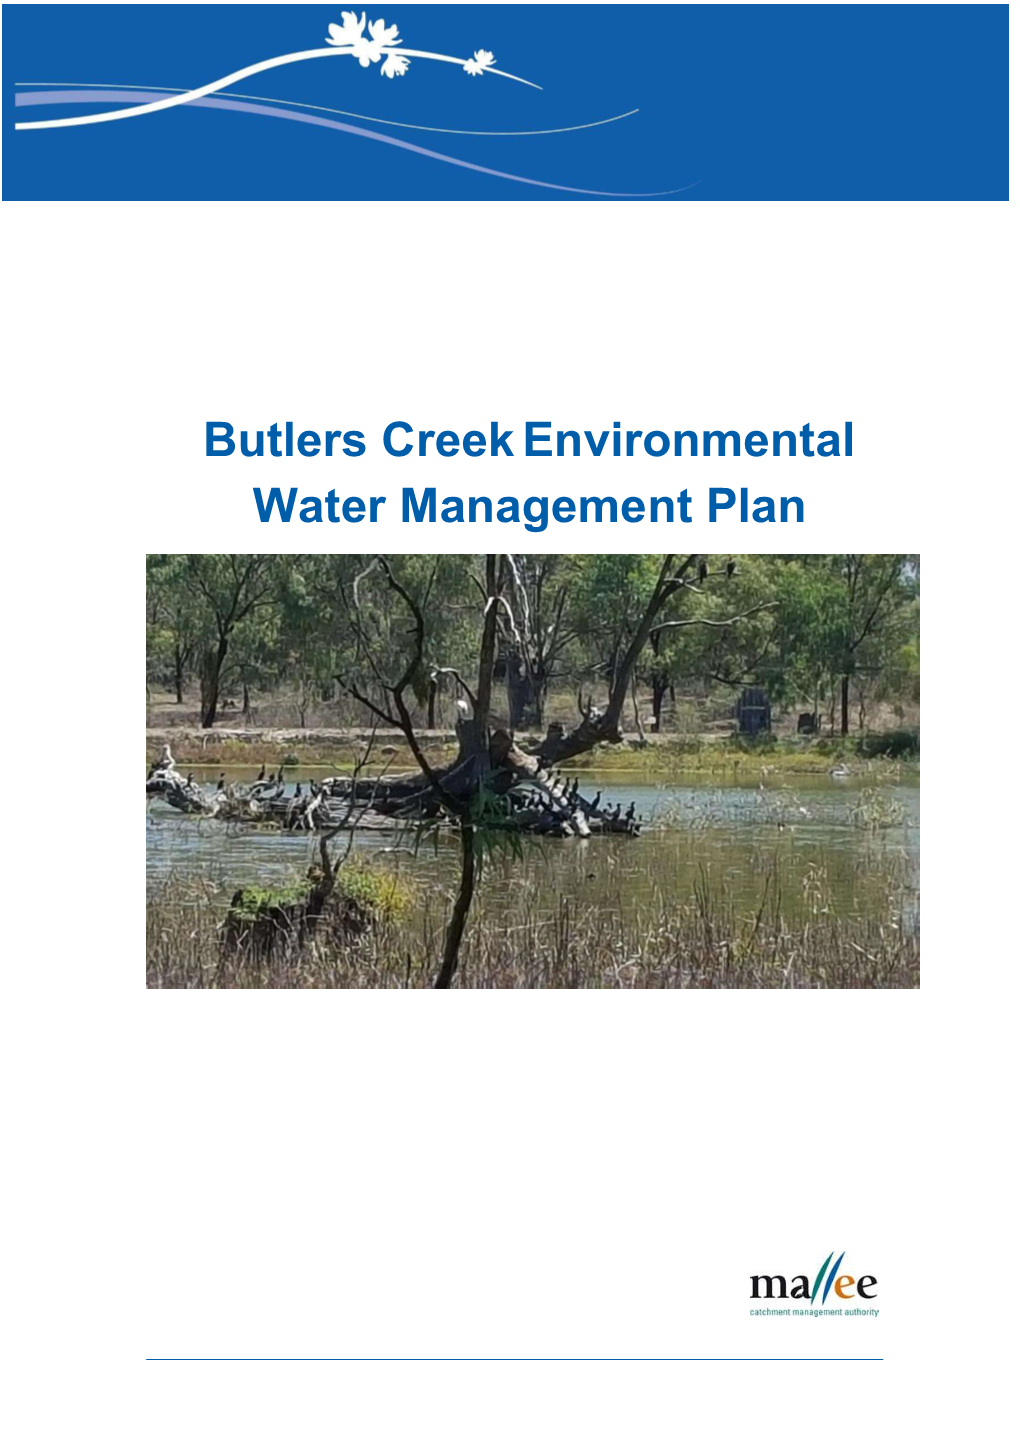 Butlers Creek Environmental Water Management Plan